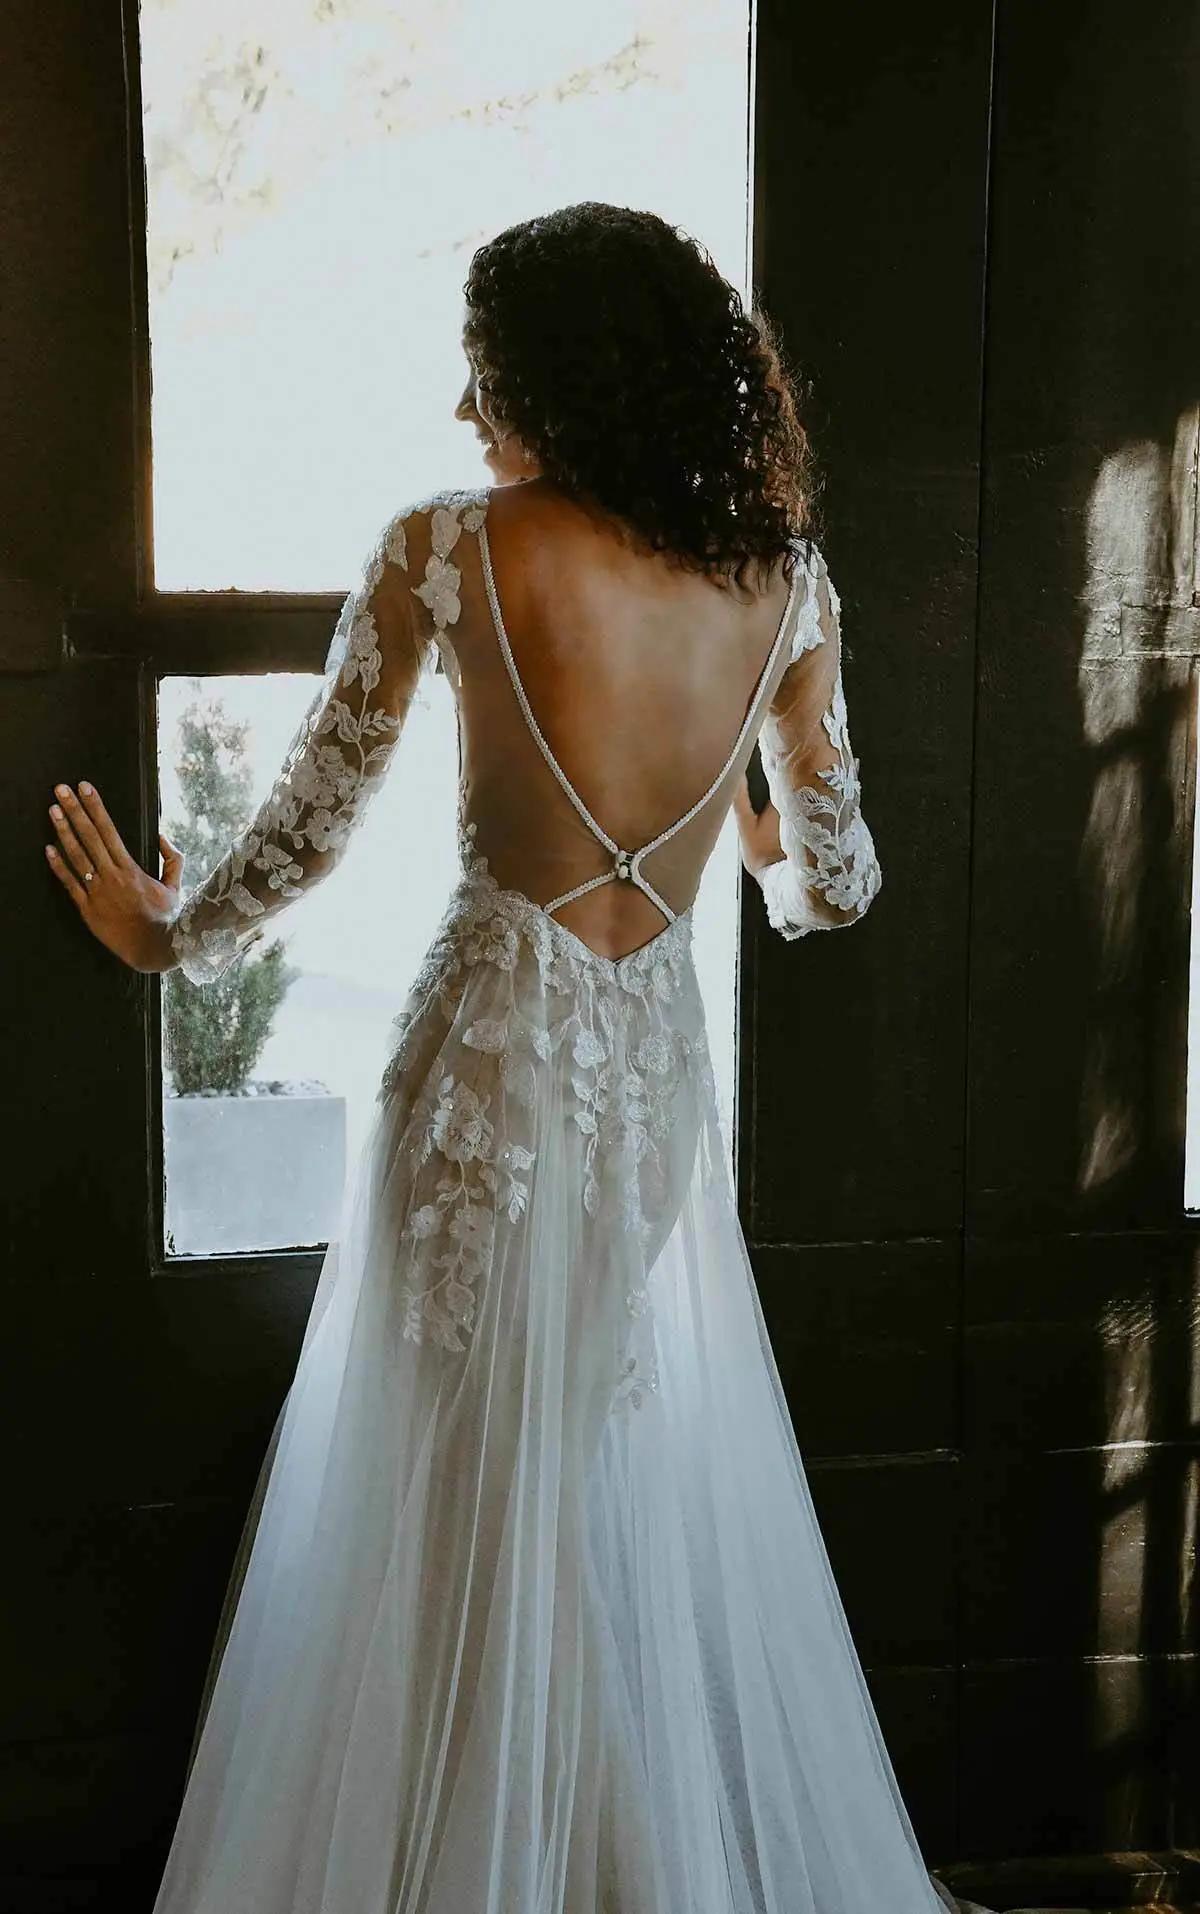 Long-Sleeved Wedding Dress with Open-Back by Stella York. Desktop Image